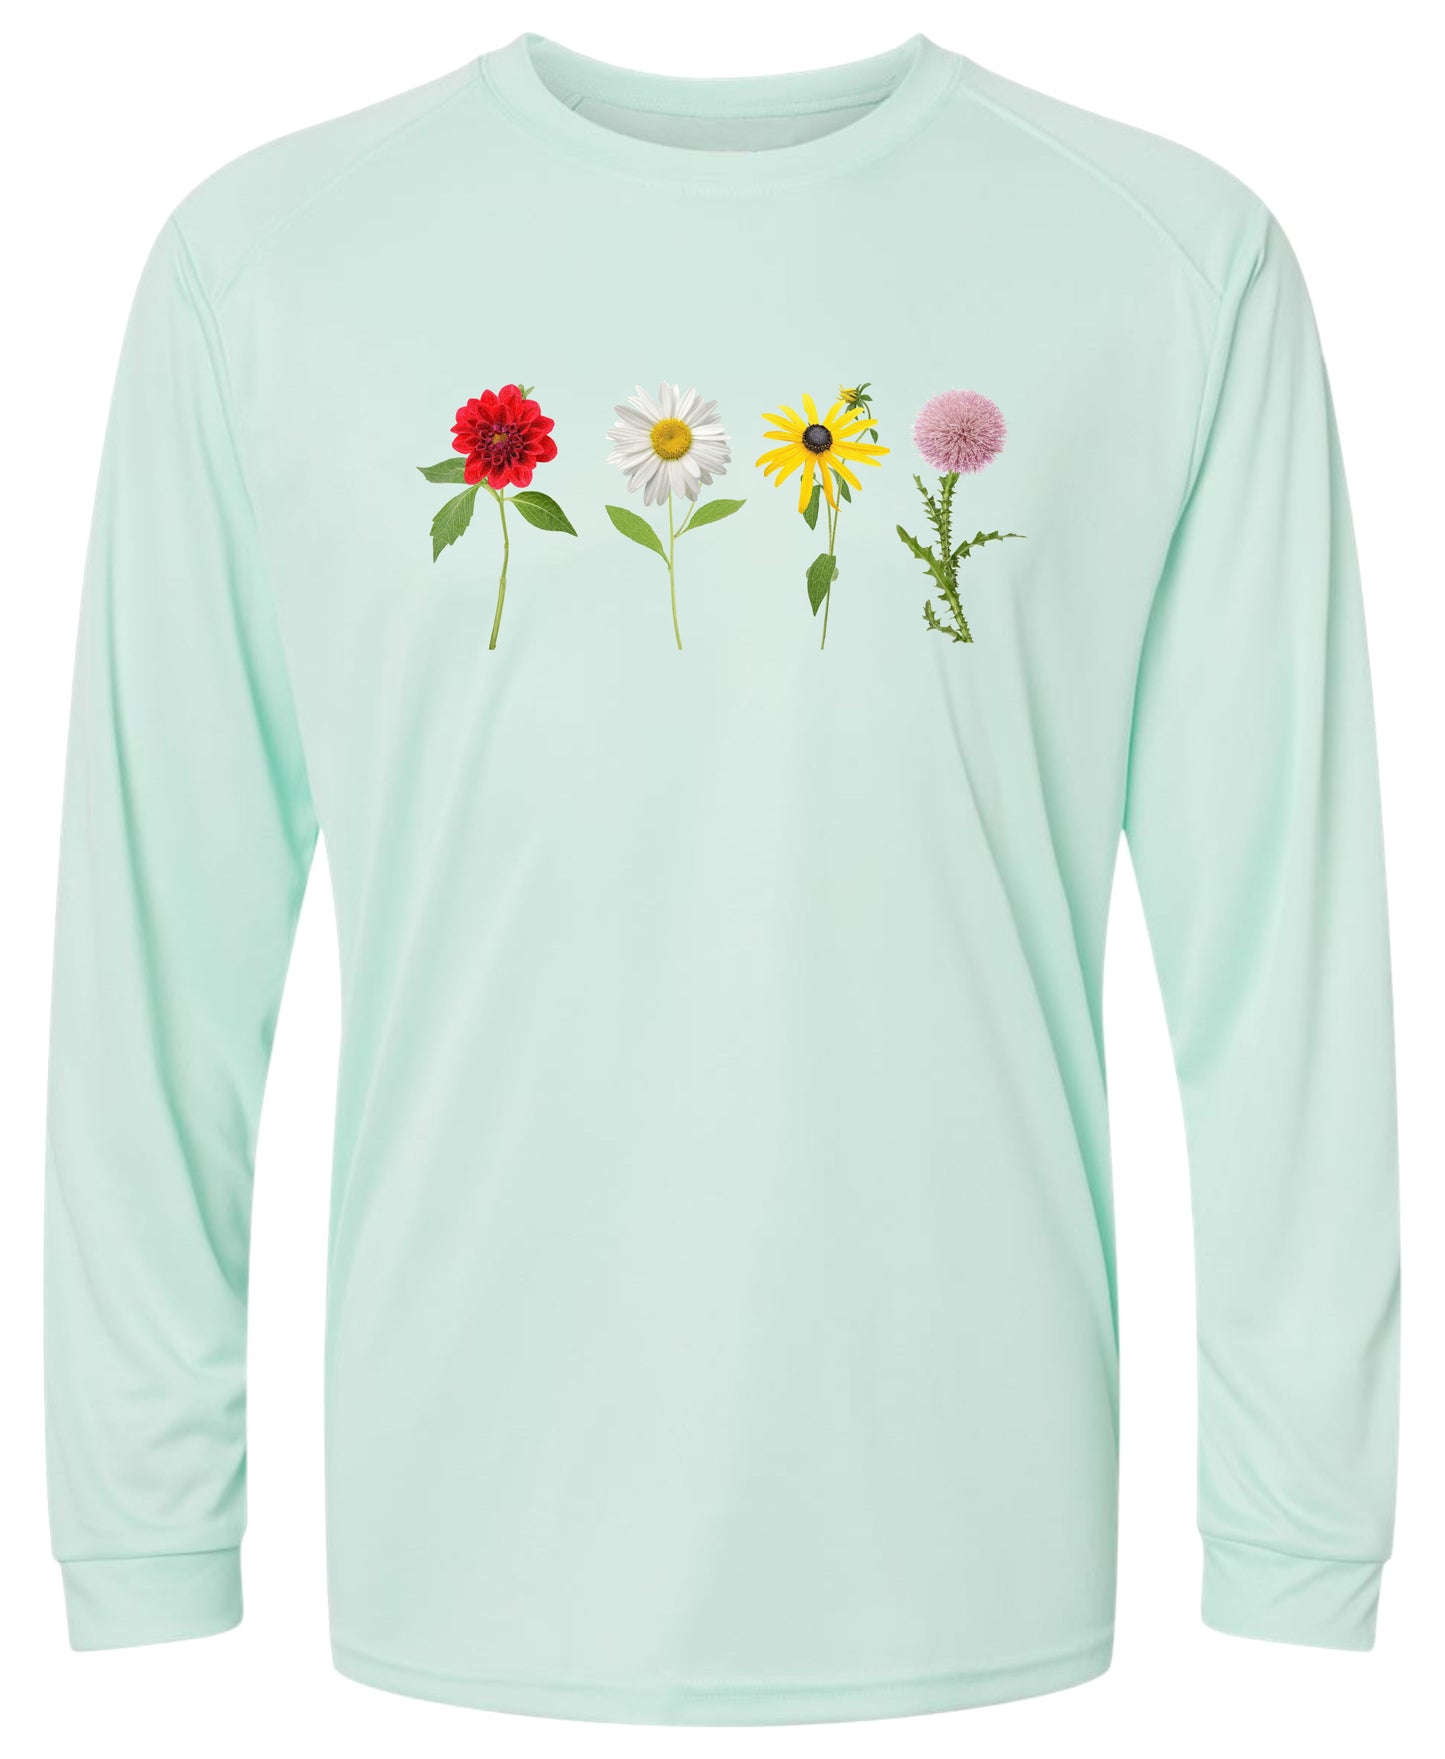 102 LW Four Flowers Long Sleeve UPF 50+ Shirt Gardening Shirt Lake Shirt Beach Shirt Outdoor Shirt Casual Shirt